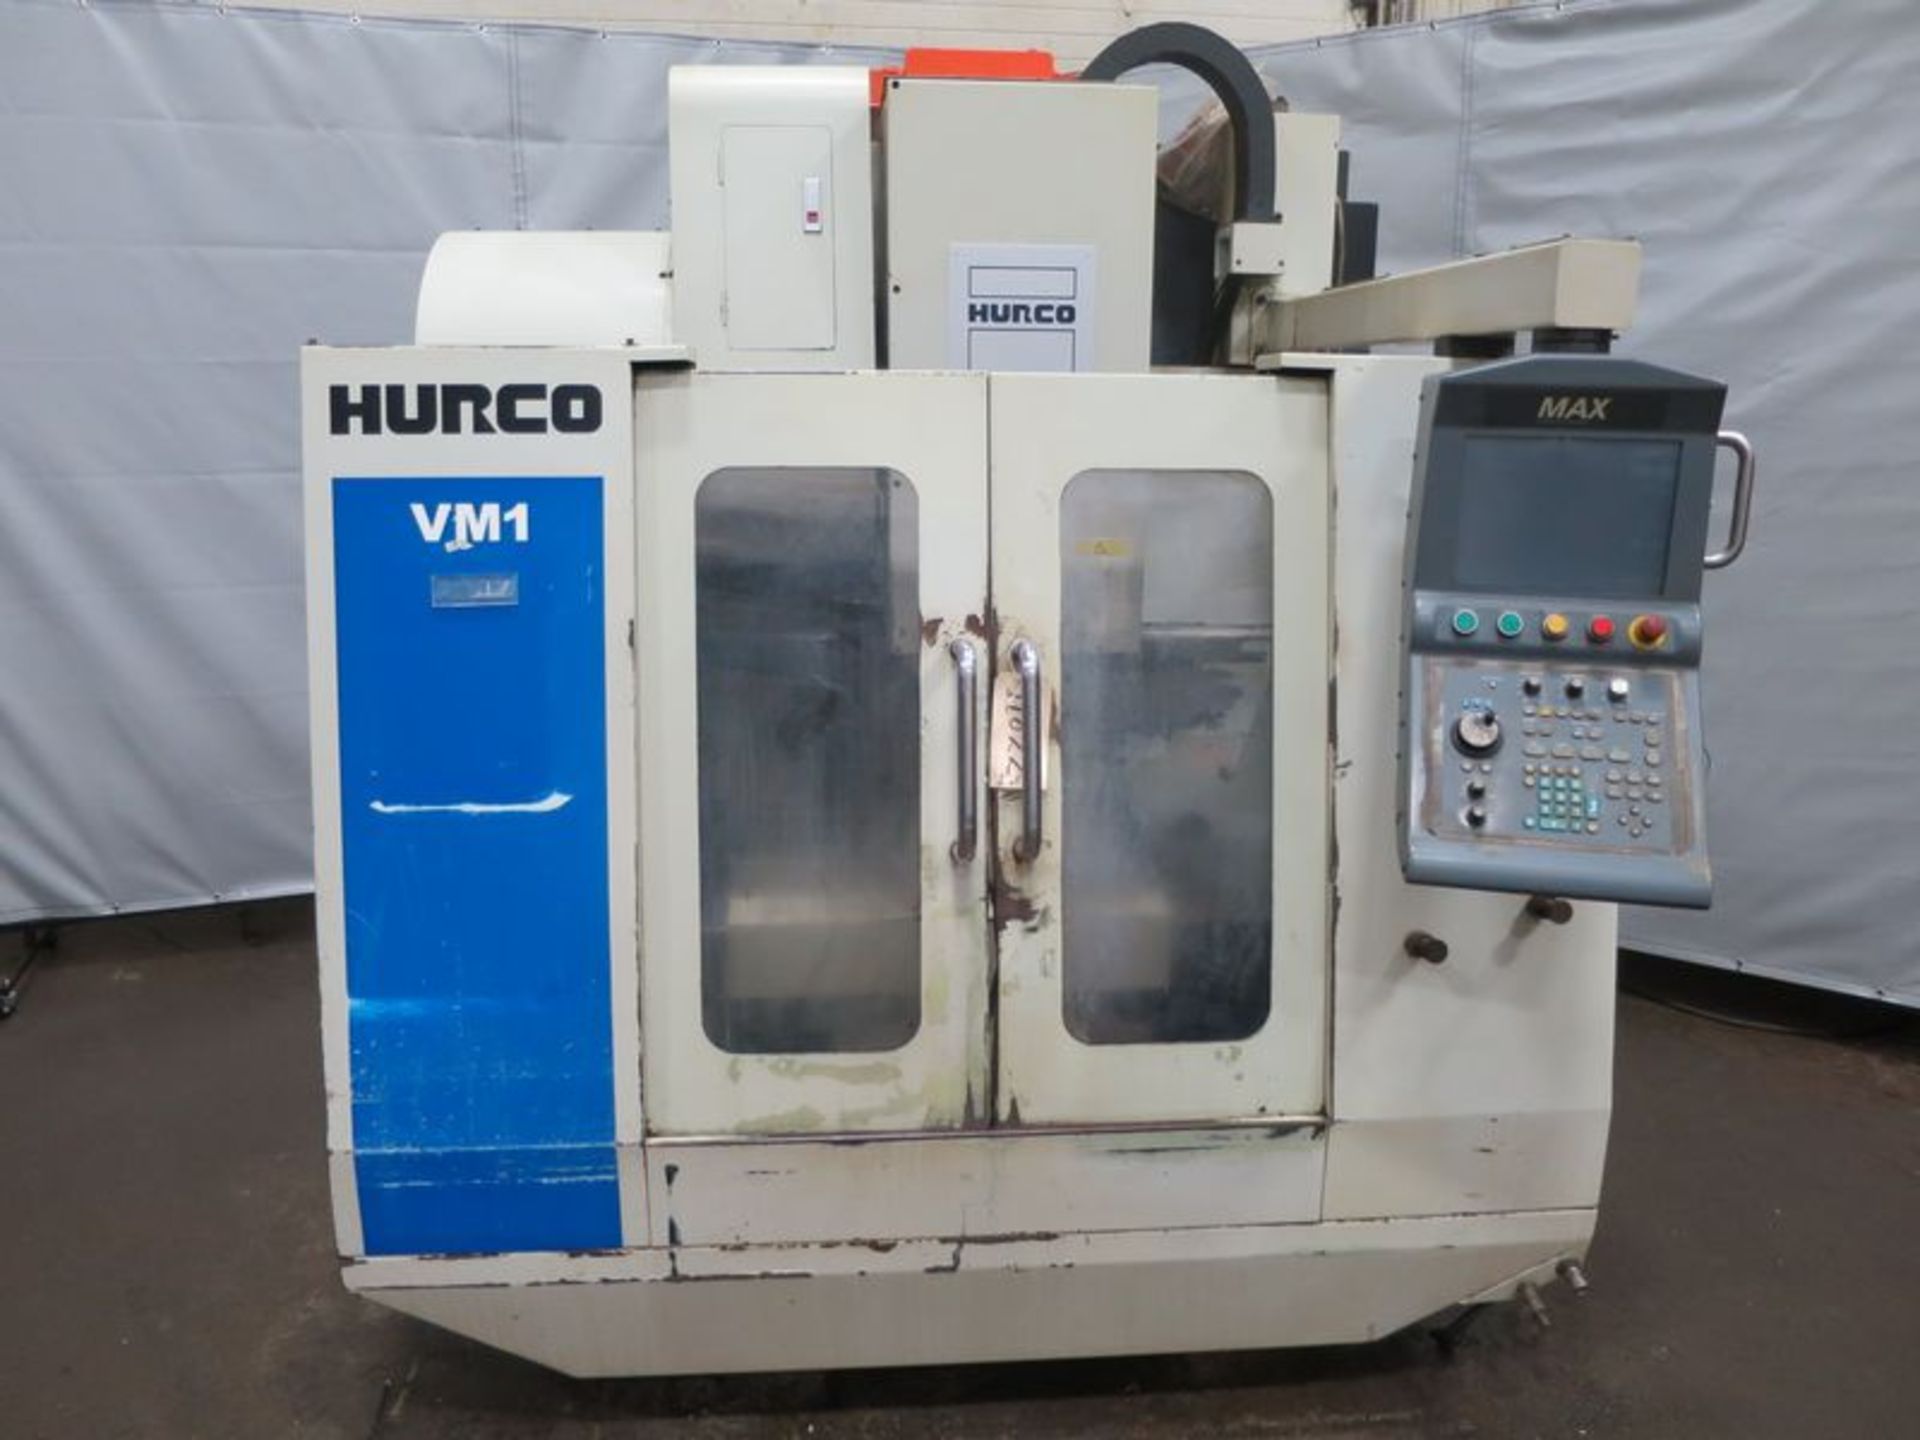 Hurco VM1 3-Axis CNC Vertical Machining Center, S/N 06301115BHA, New 2005